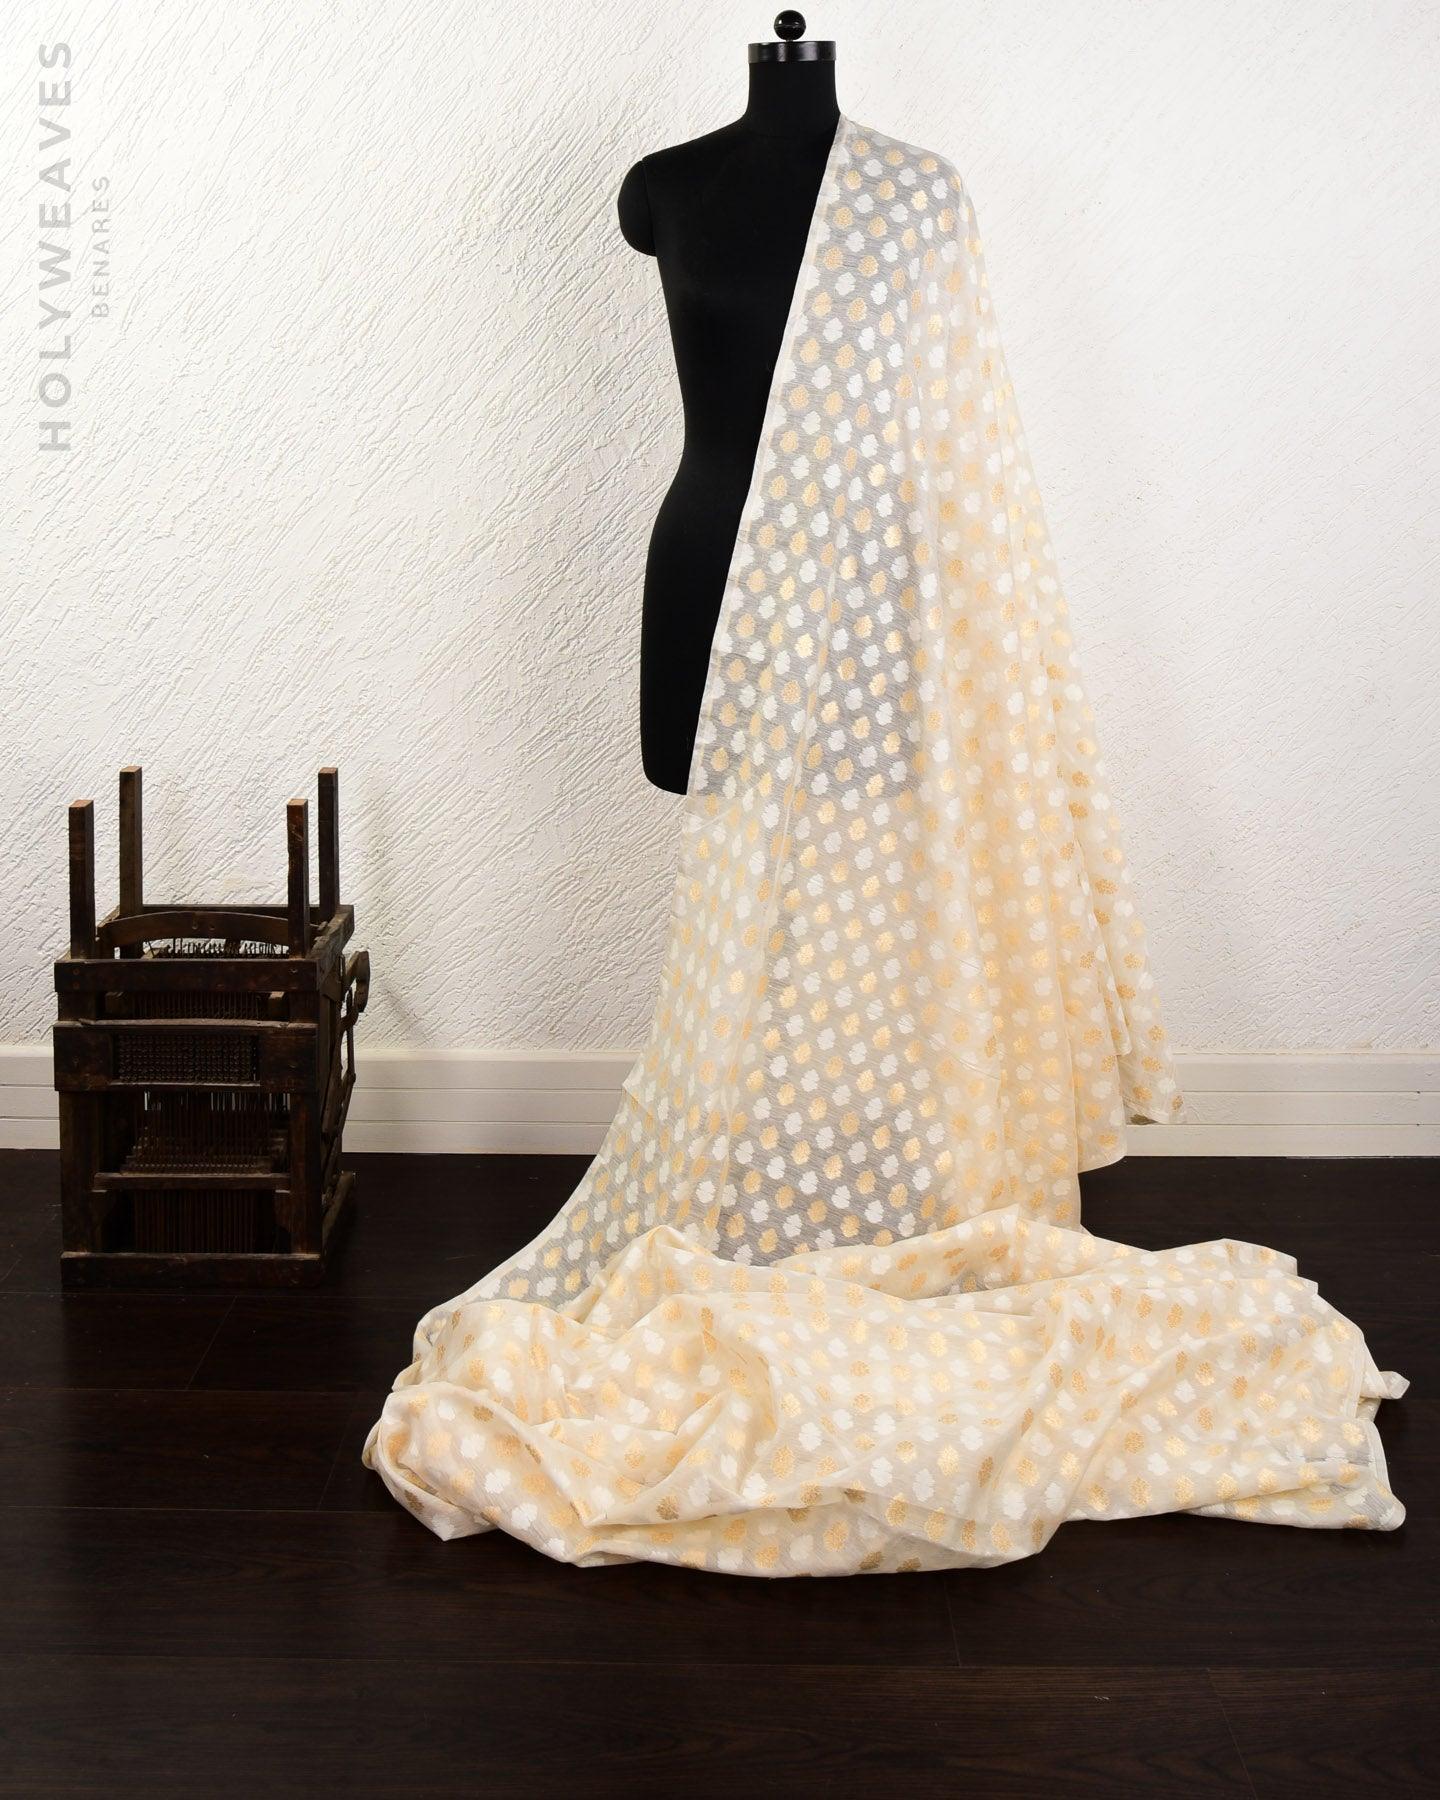 Cream Banarasi Gold Zari & Resham Buti Cutwork Brocade Woven Cotton Silk Fabric - By HolyWeaves, Benares